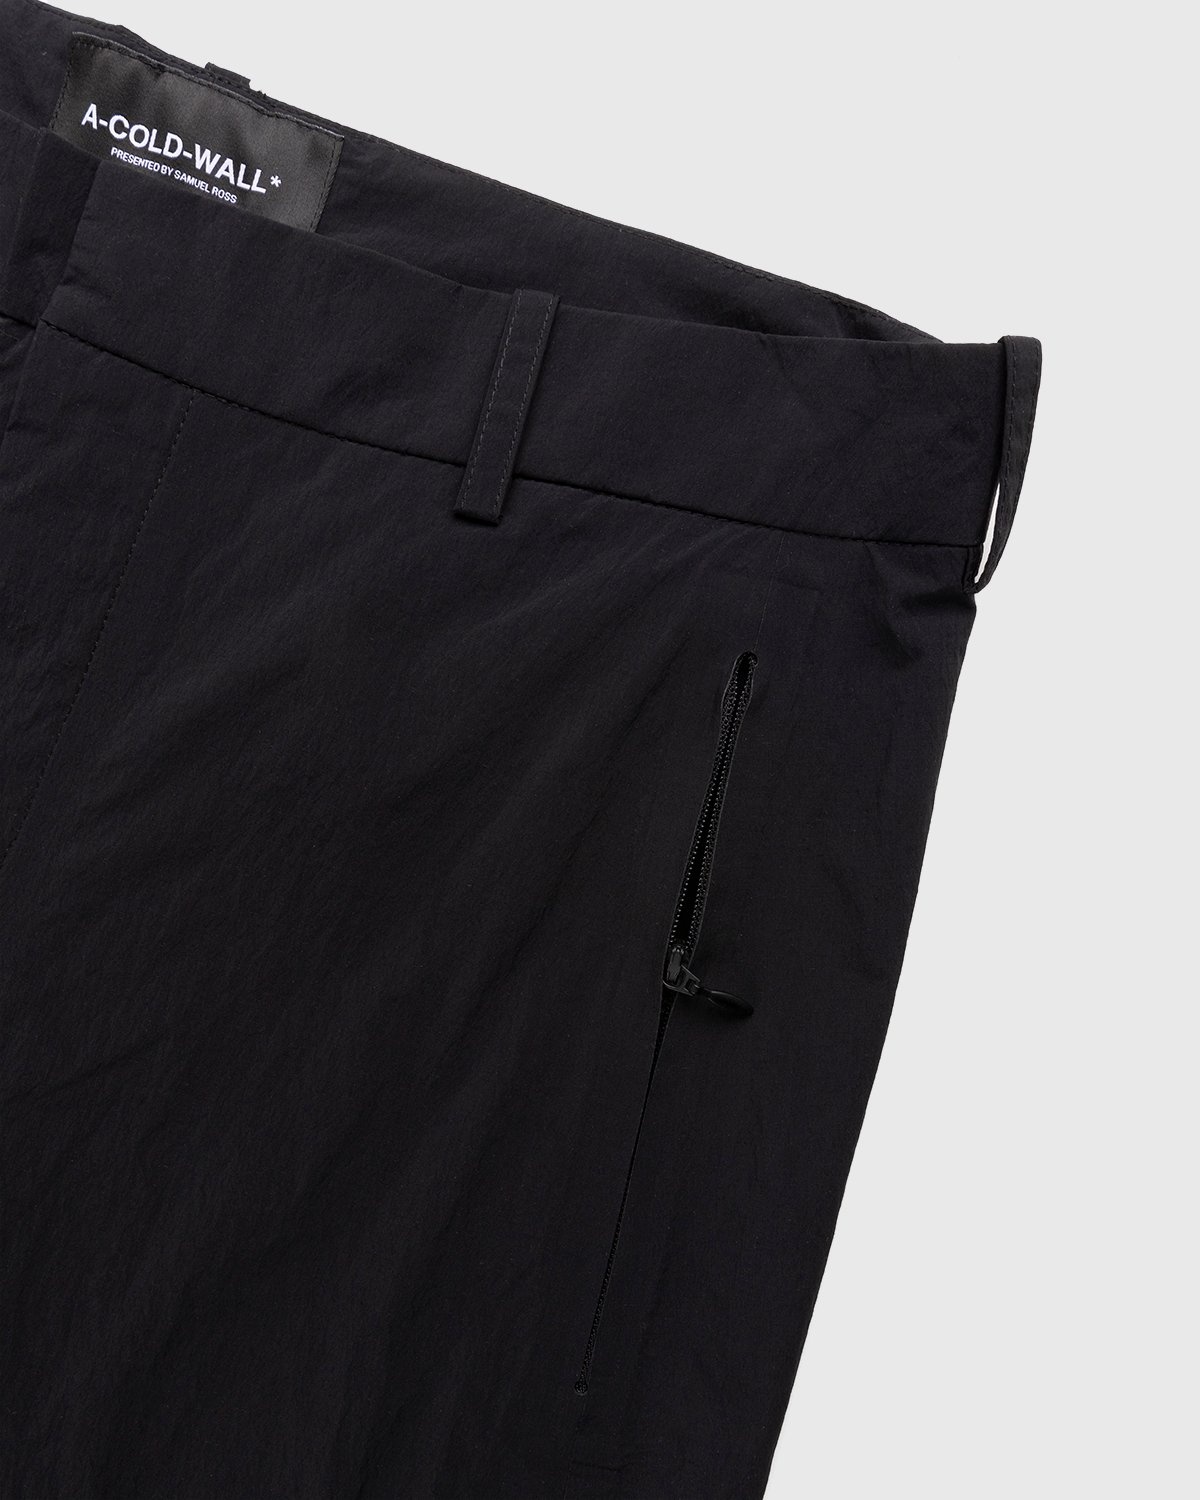 A-Cold-Wall* – Stealth Nylon Pant Black | Highsnobiety Shop